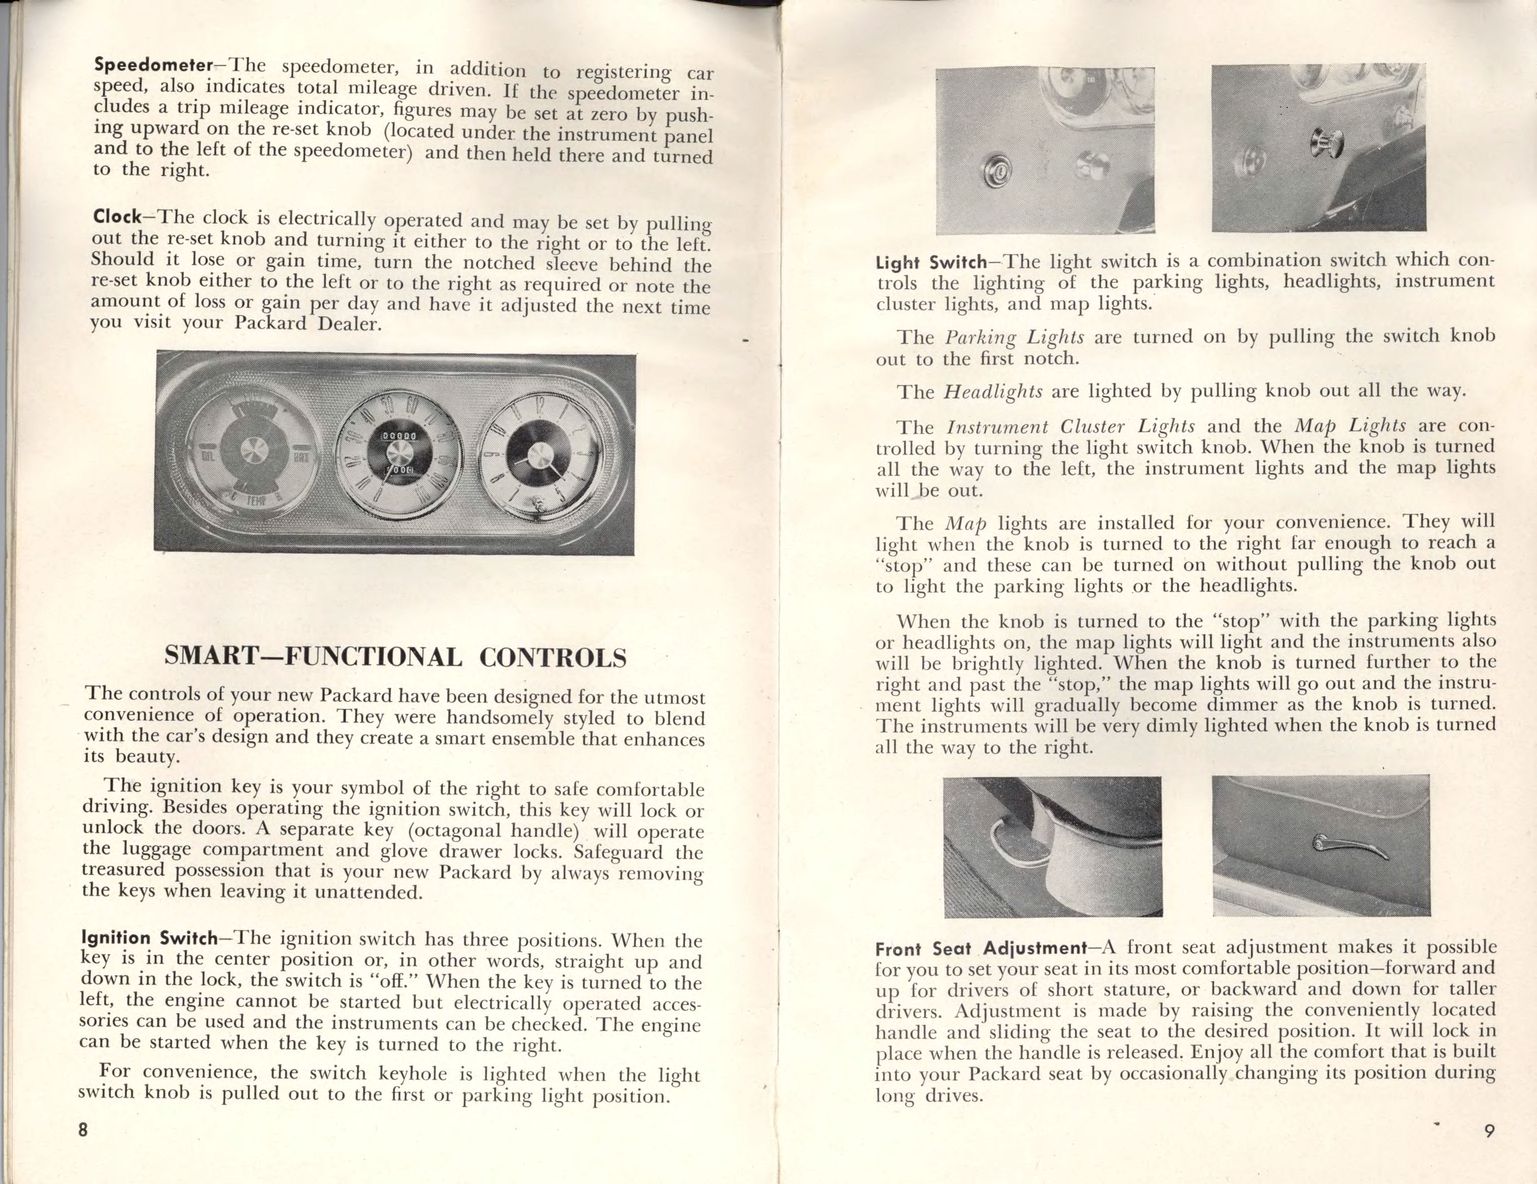 1951_Packard_Manual-08-09